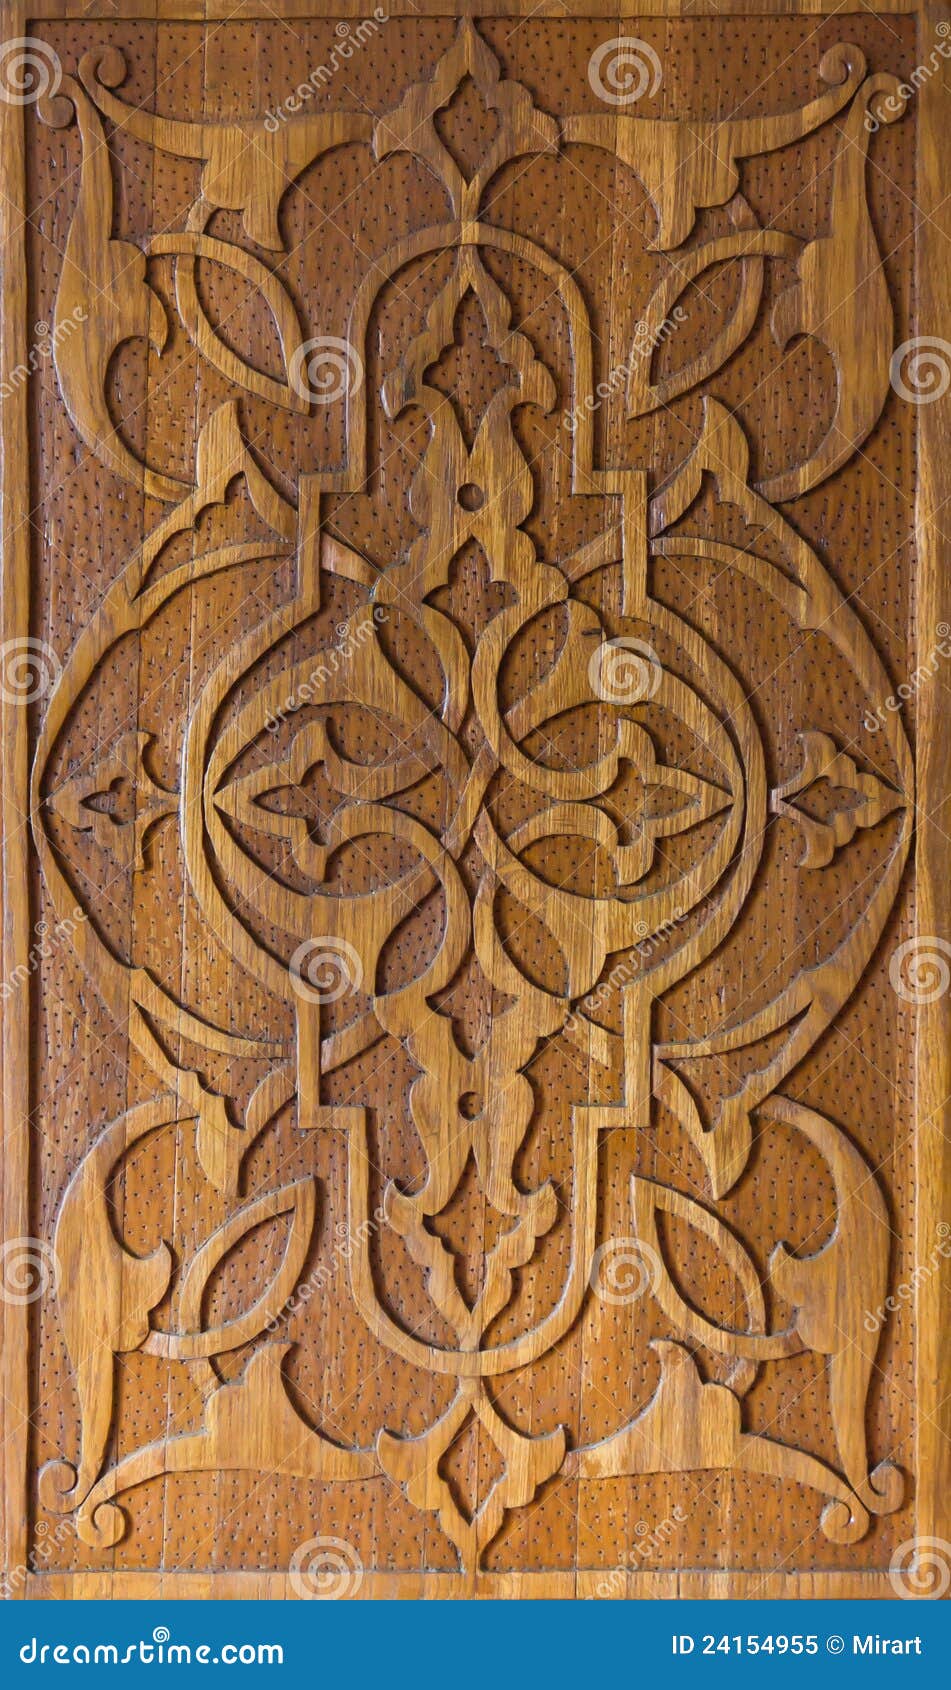 Wood Carving Art